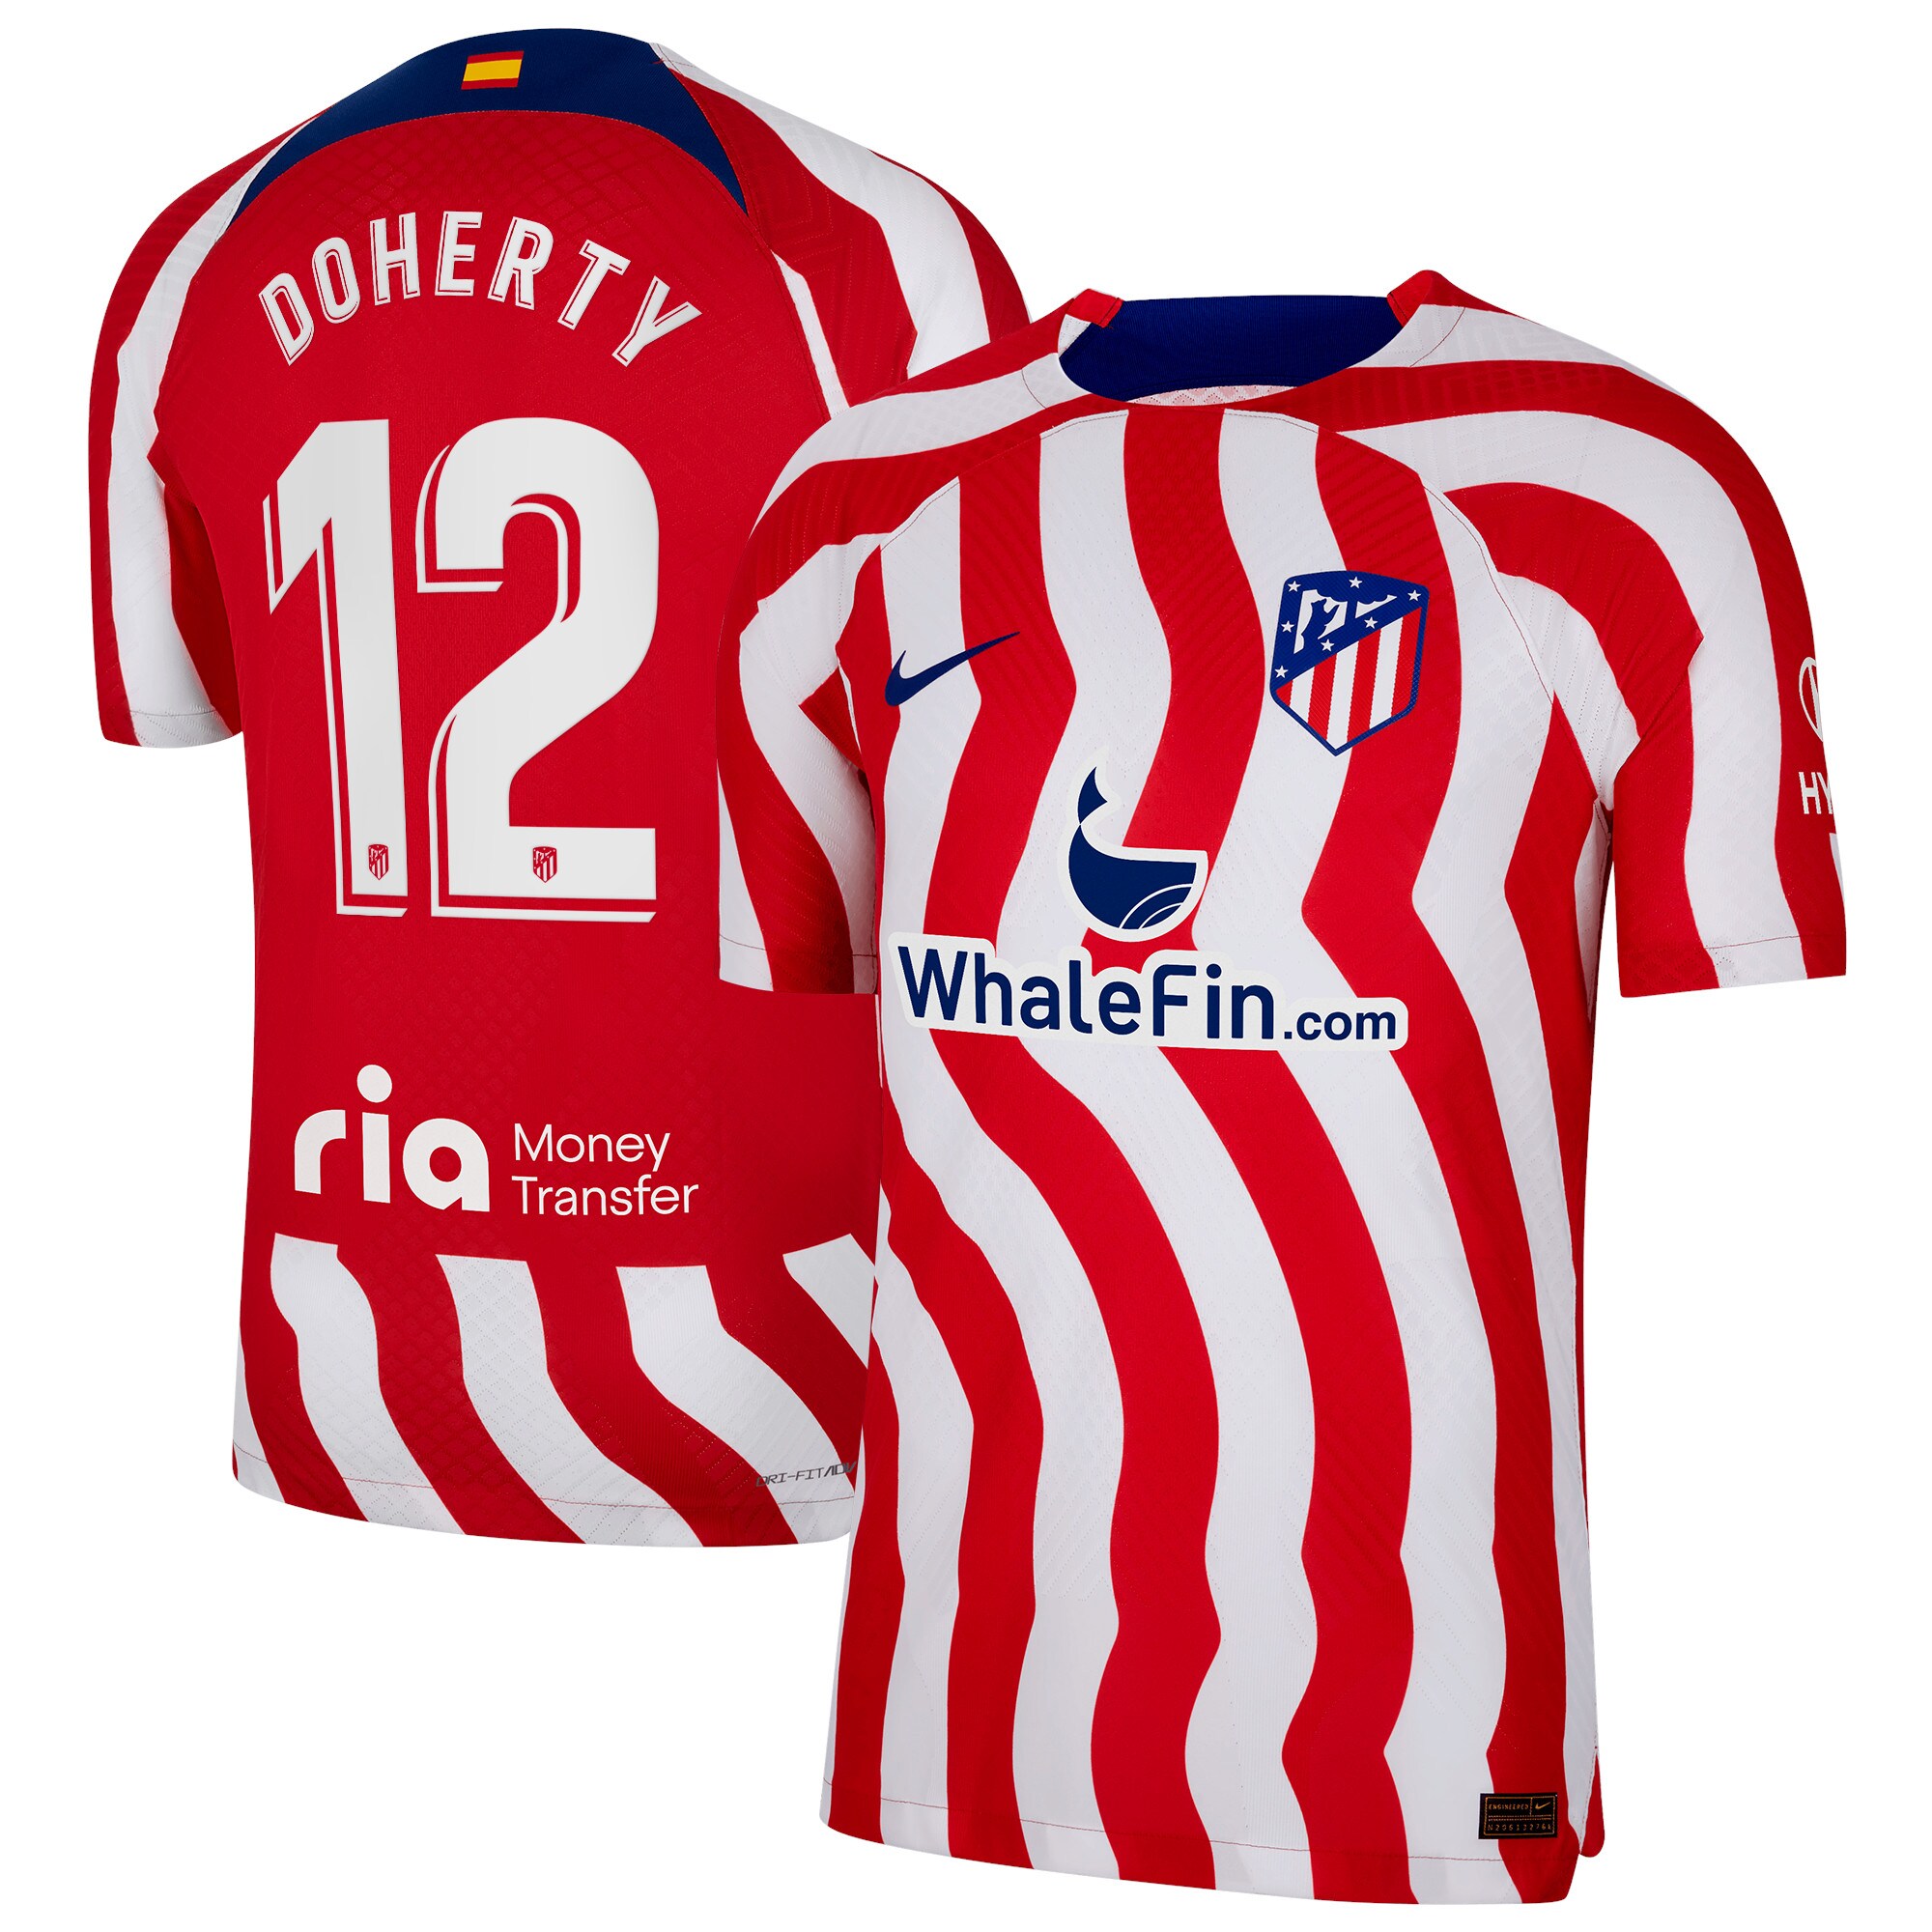 Atlético de Madrid Home Vapor Match Shirt 2022-23 with Doherty 12 printing